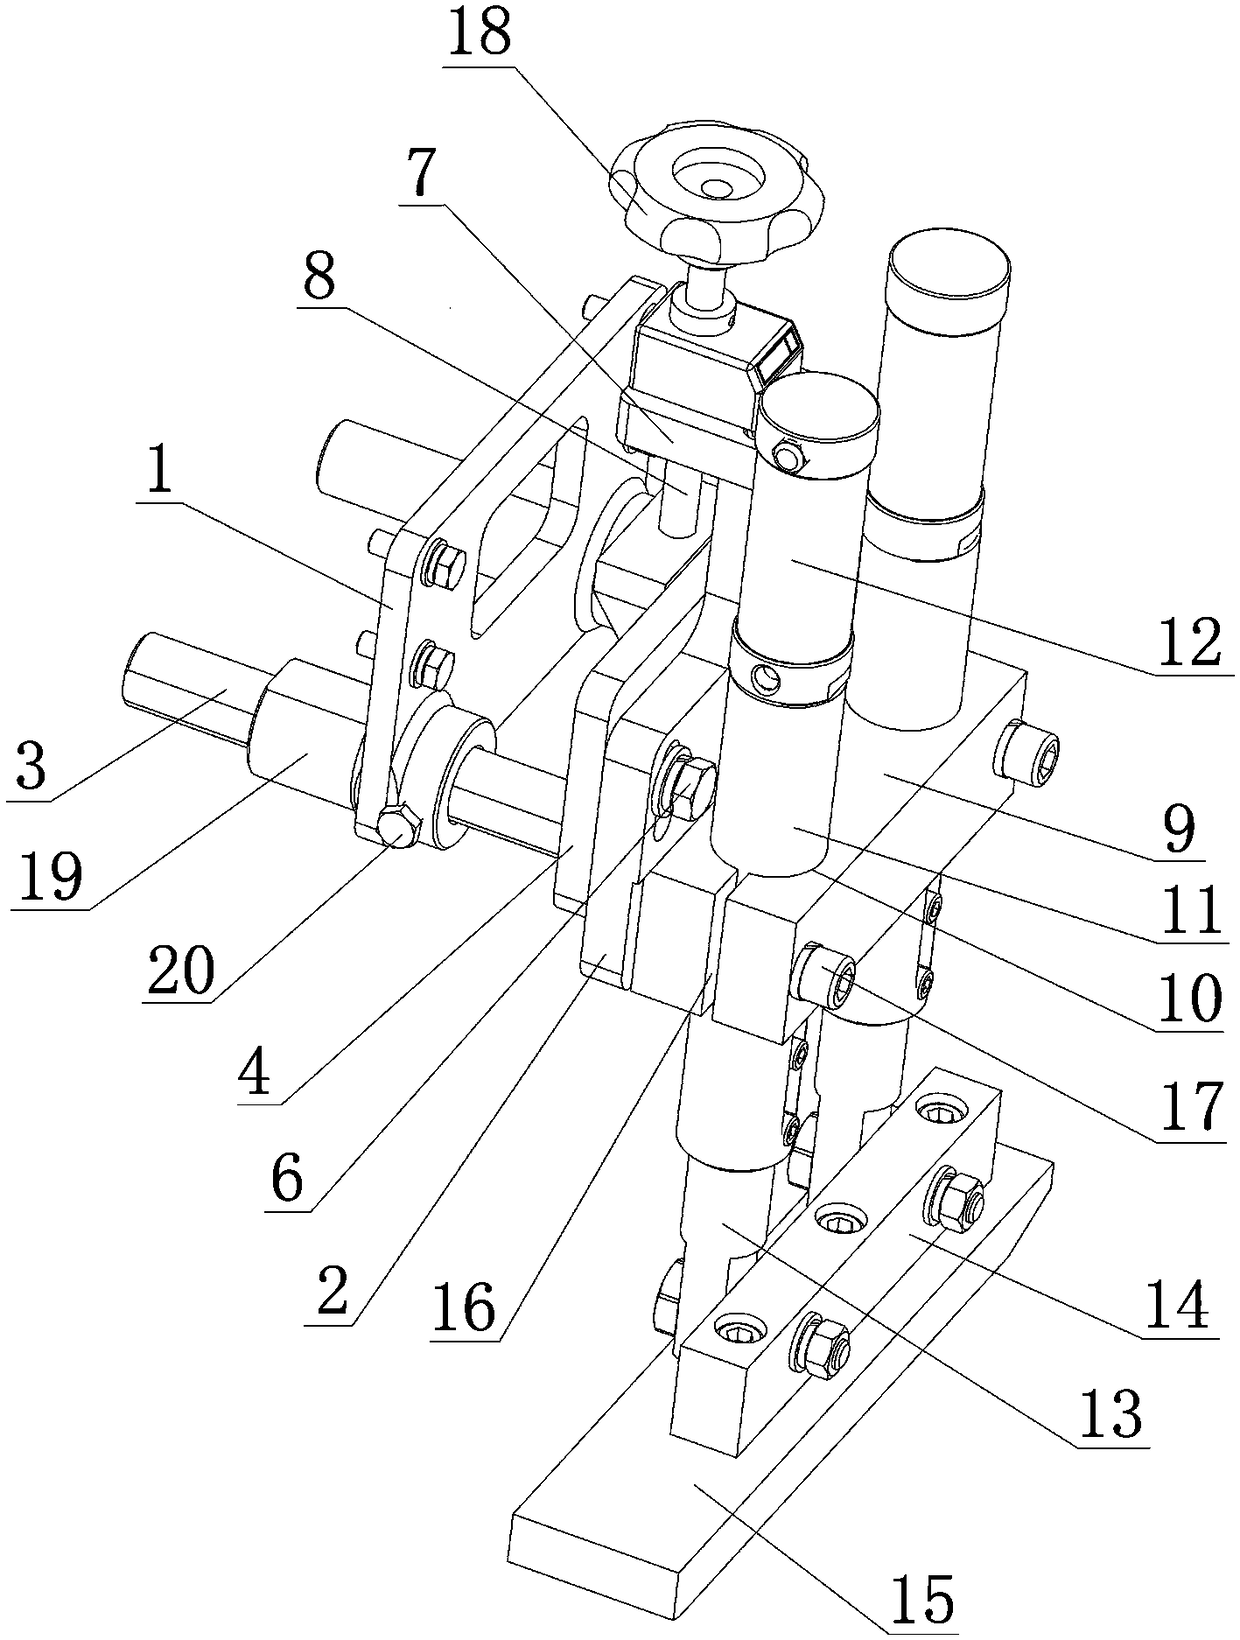 An upper pressing plate pressing mechanism for a vertical shaft split sawing machine